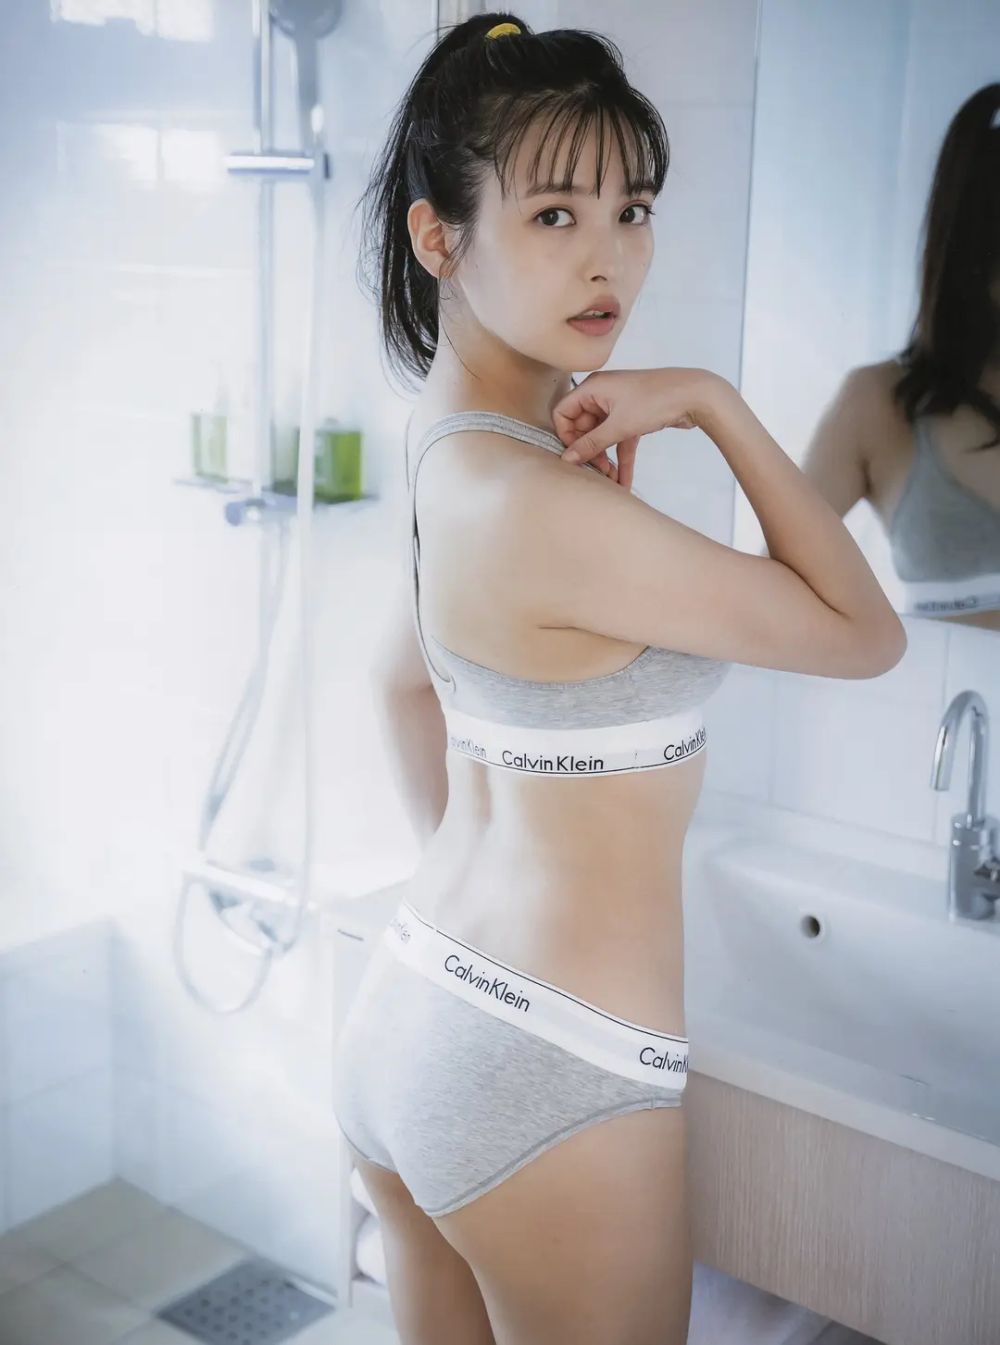 Sumire Uesaka Sexy and Hottest Photos , Latest Pics